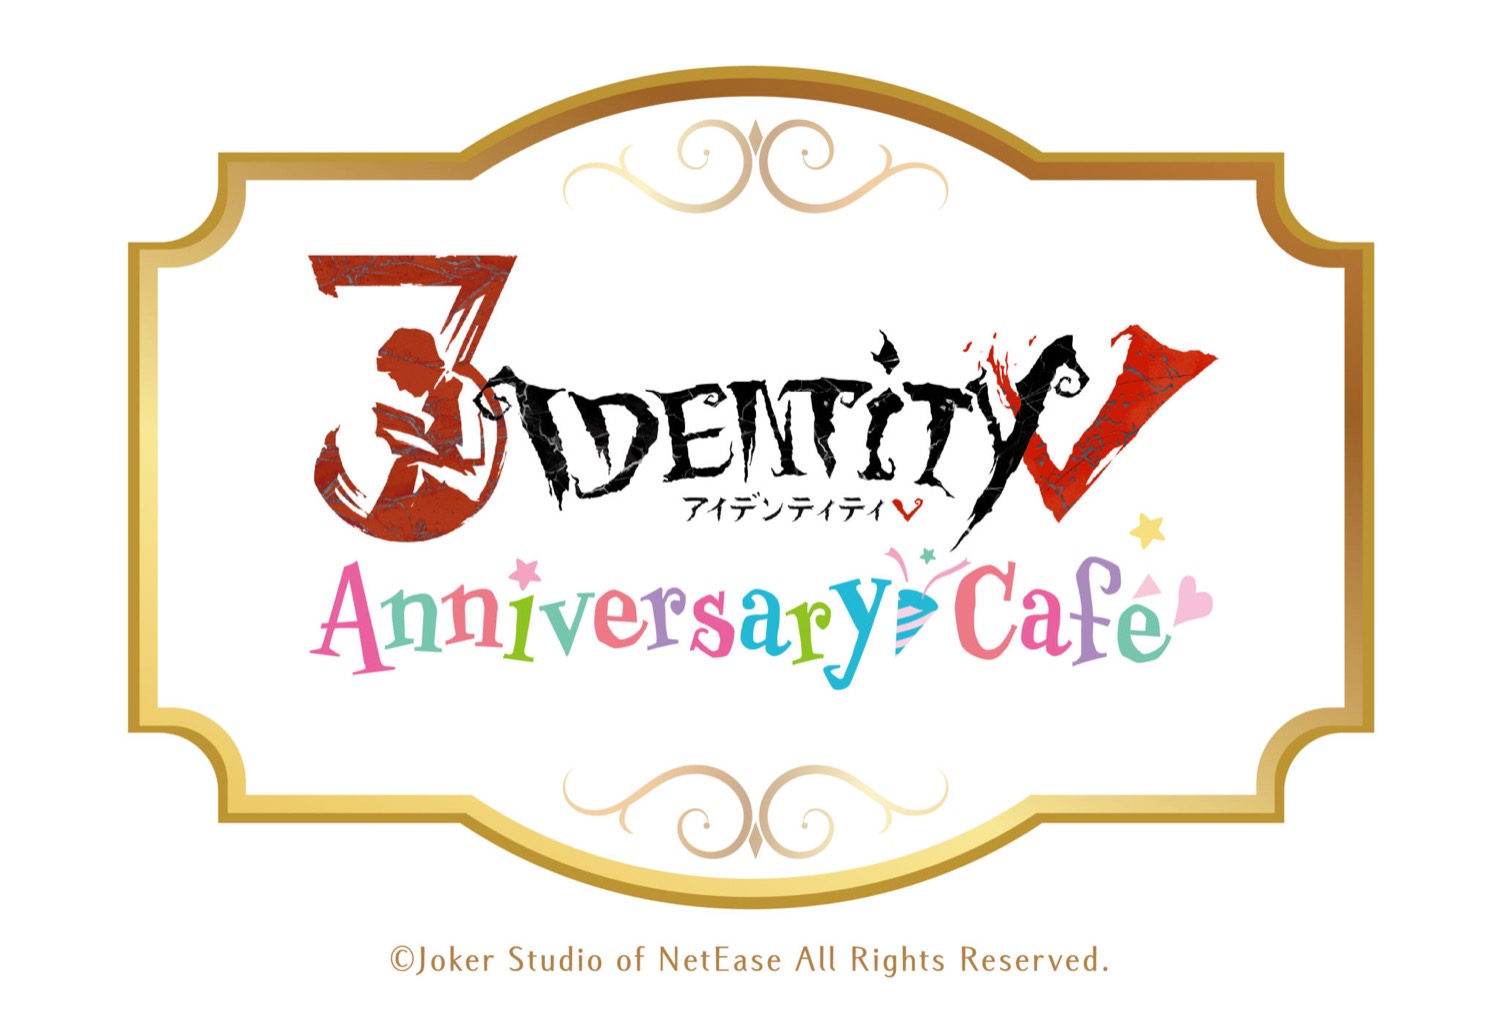 Identity V 第五人格カフェ 第2弾 in スイパラ 7月17日より開催!